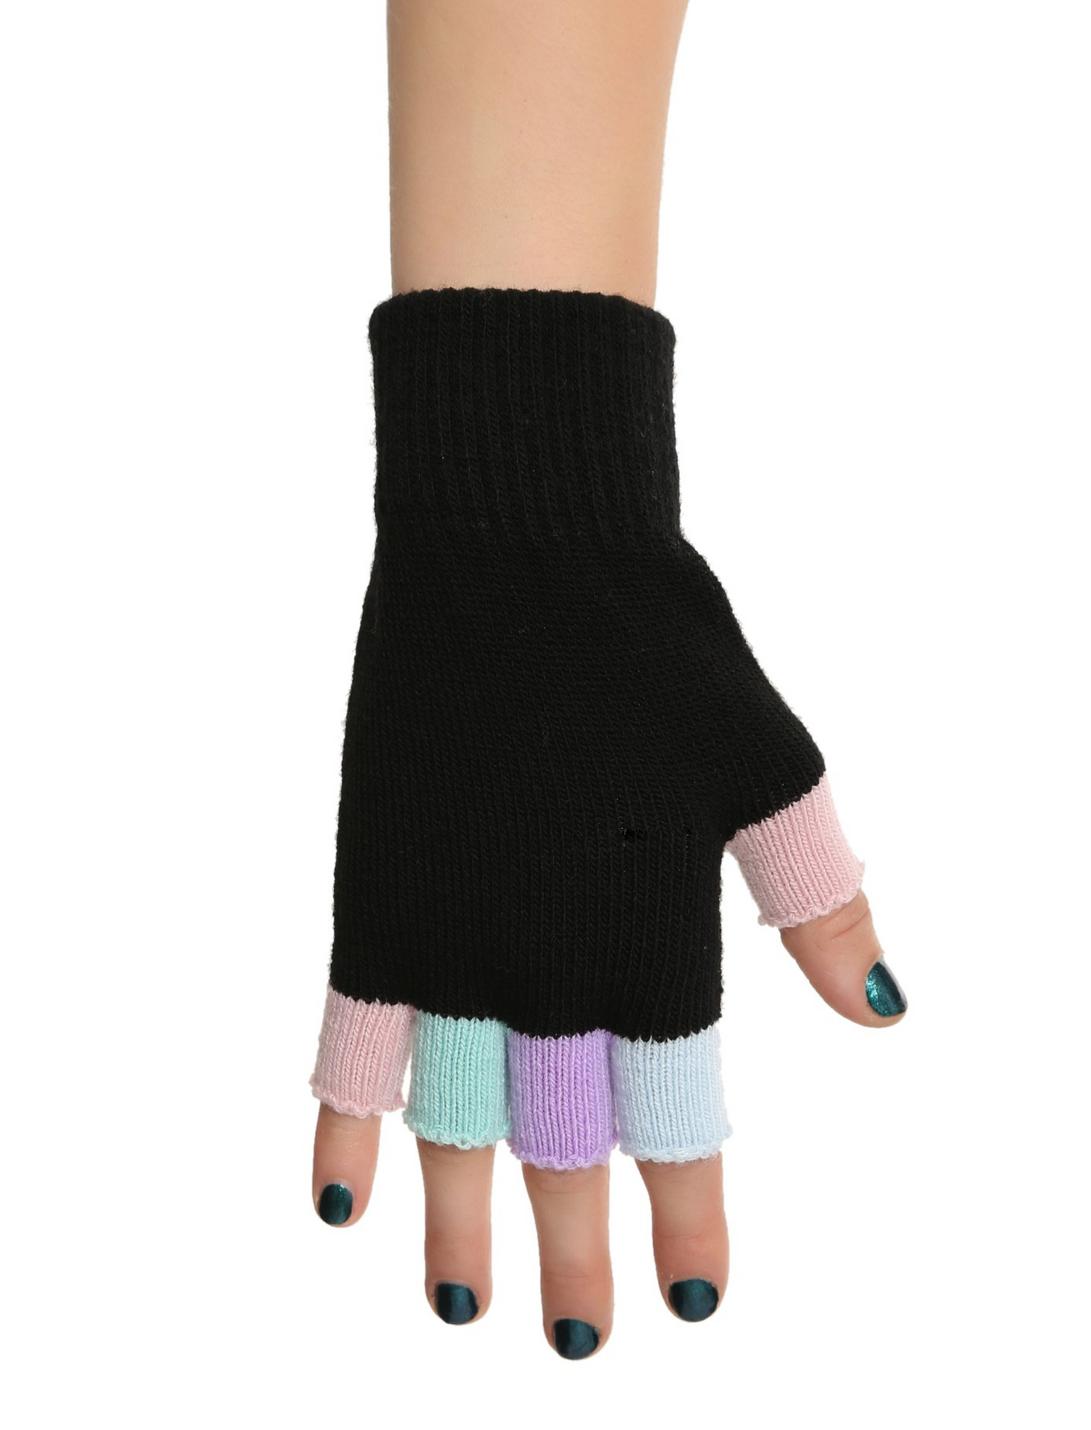 Pastel & Black Multi-Colored Fingerless Gloves, , hi-res